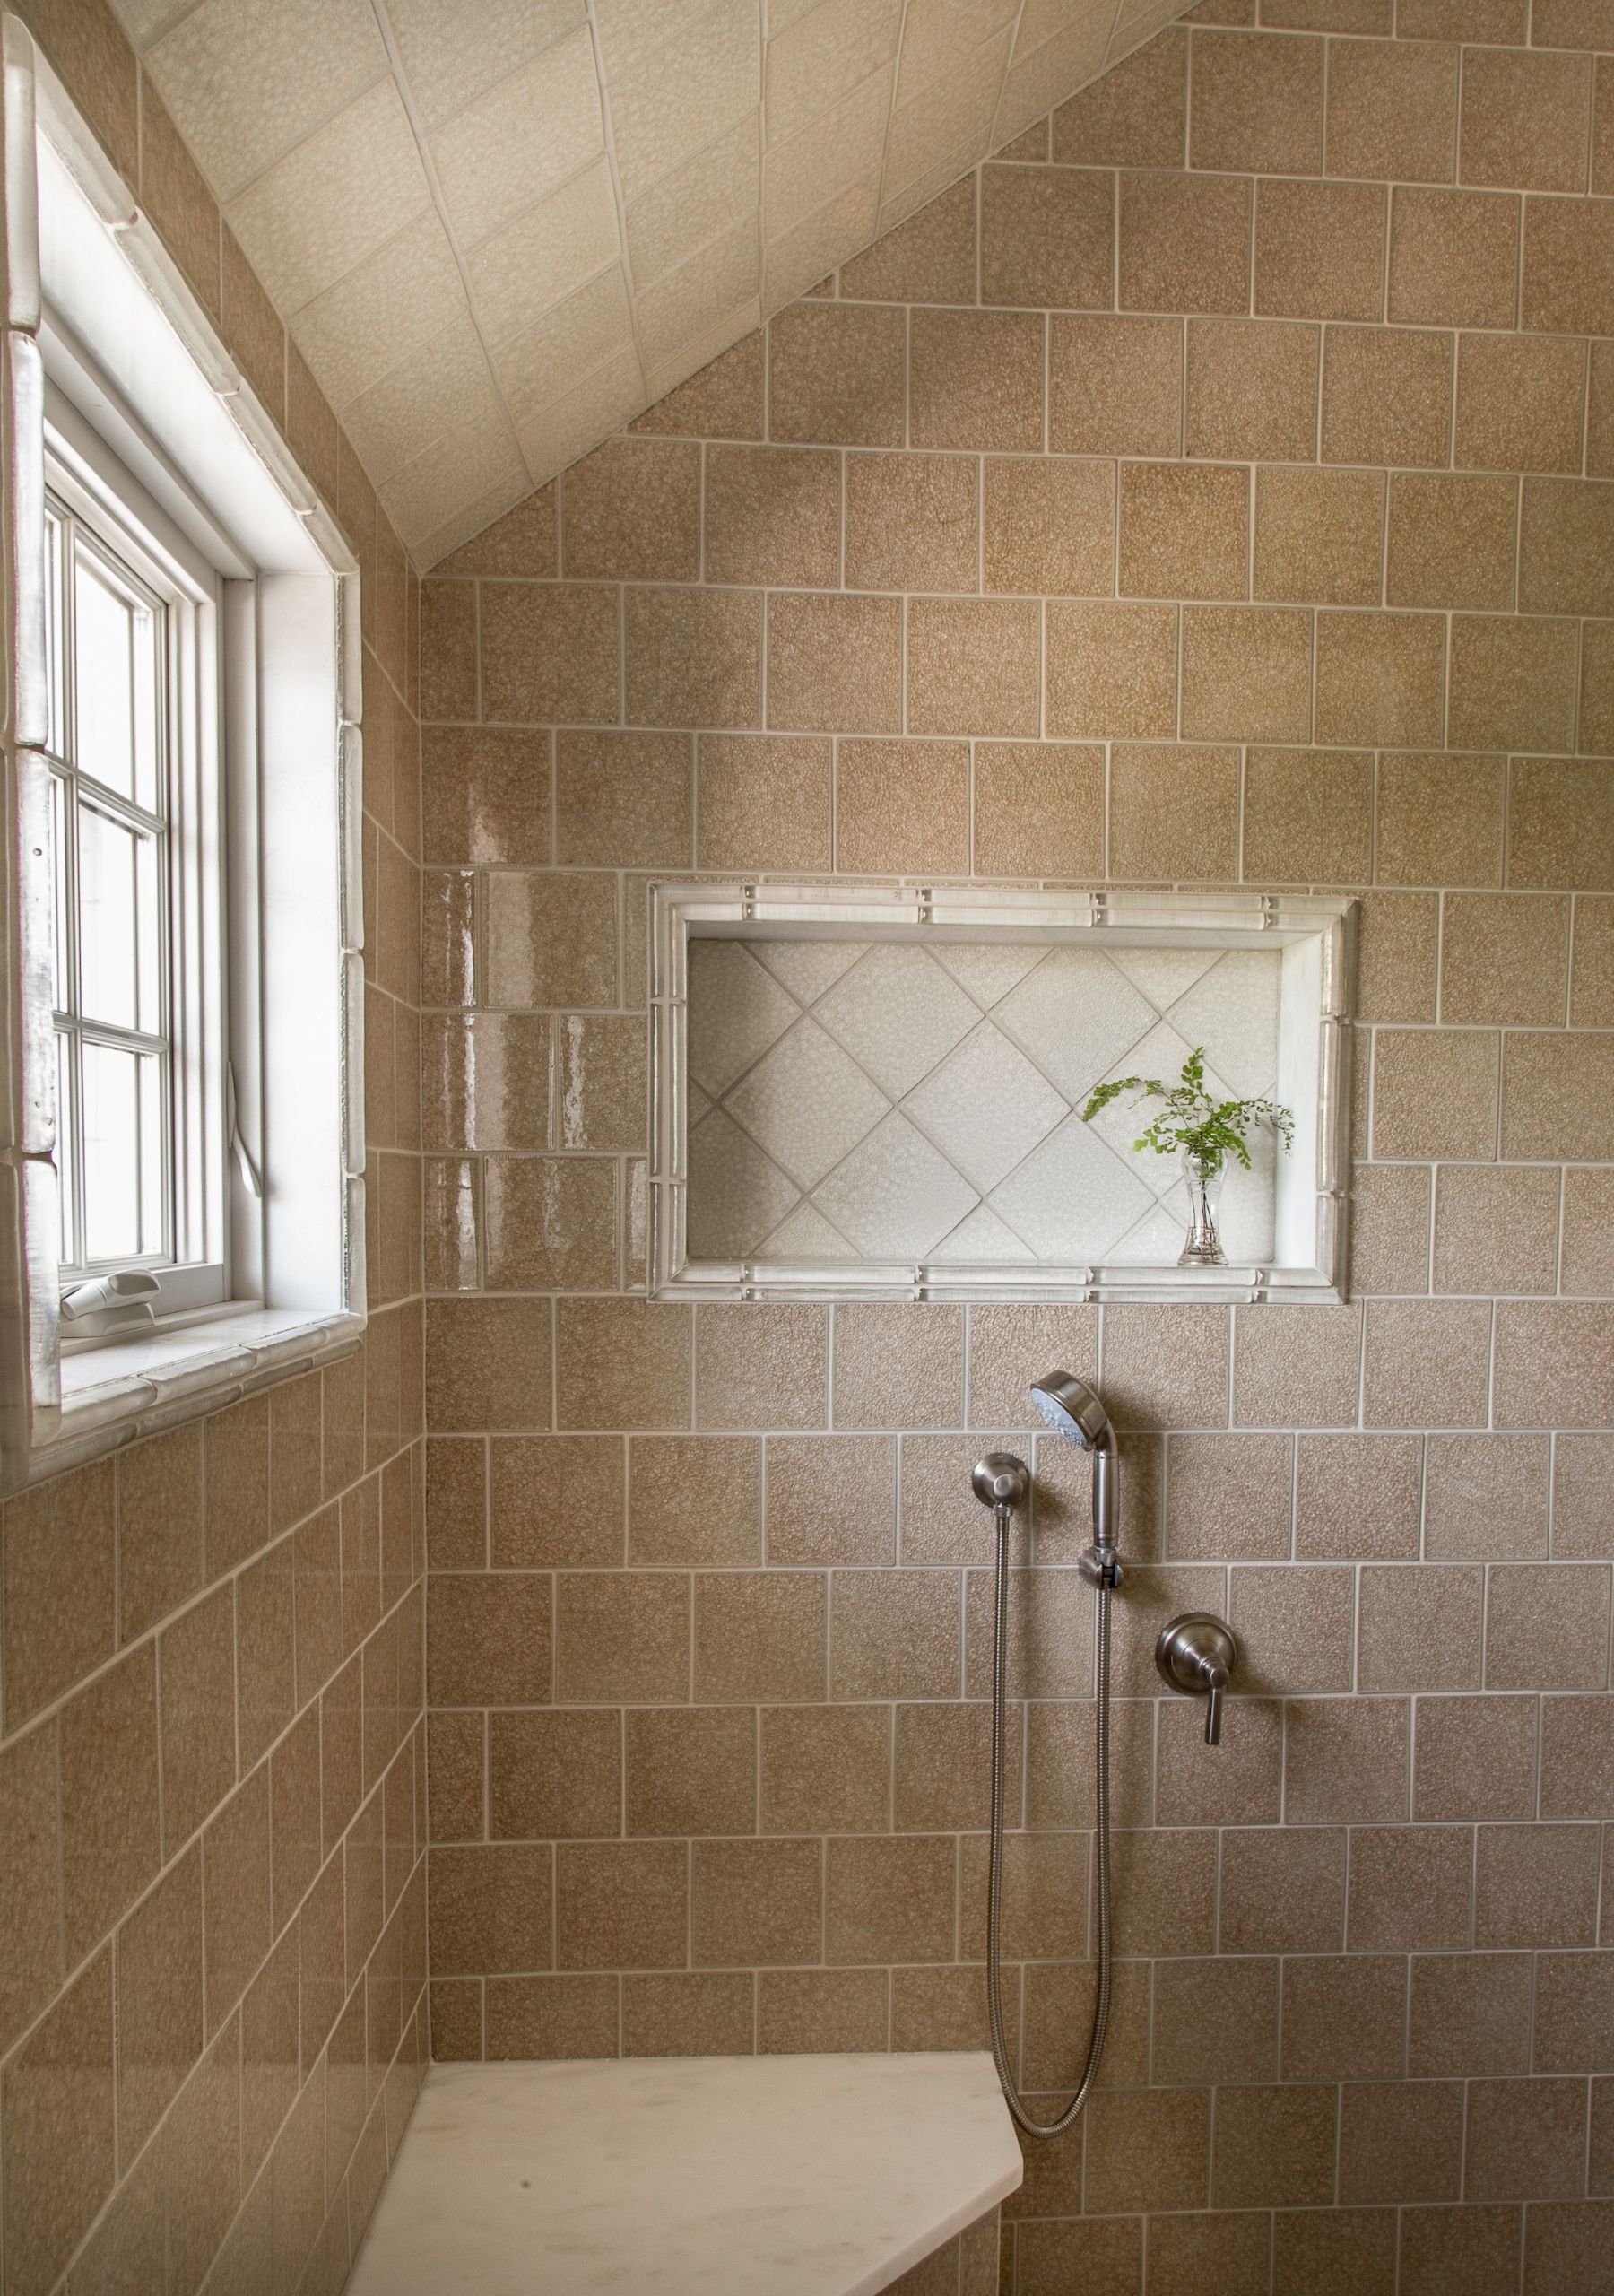 Bathroom Shower Tiles Ideas
 Top Ten Trends in Tile and Stone Designs